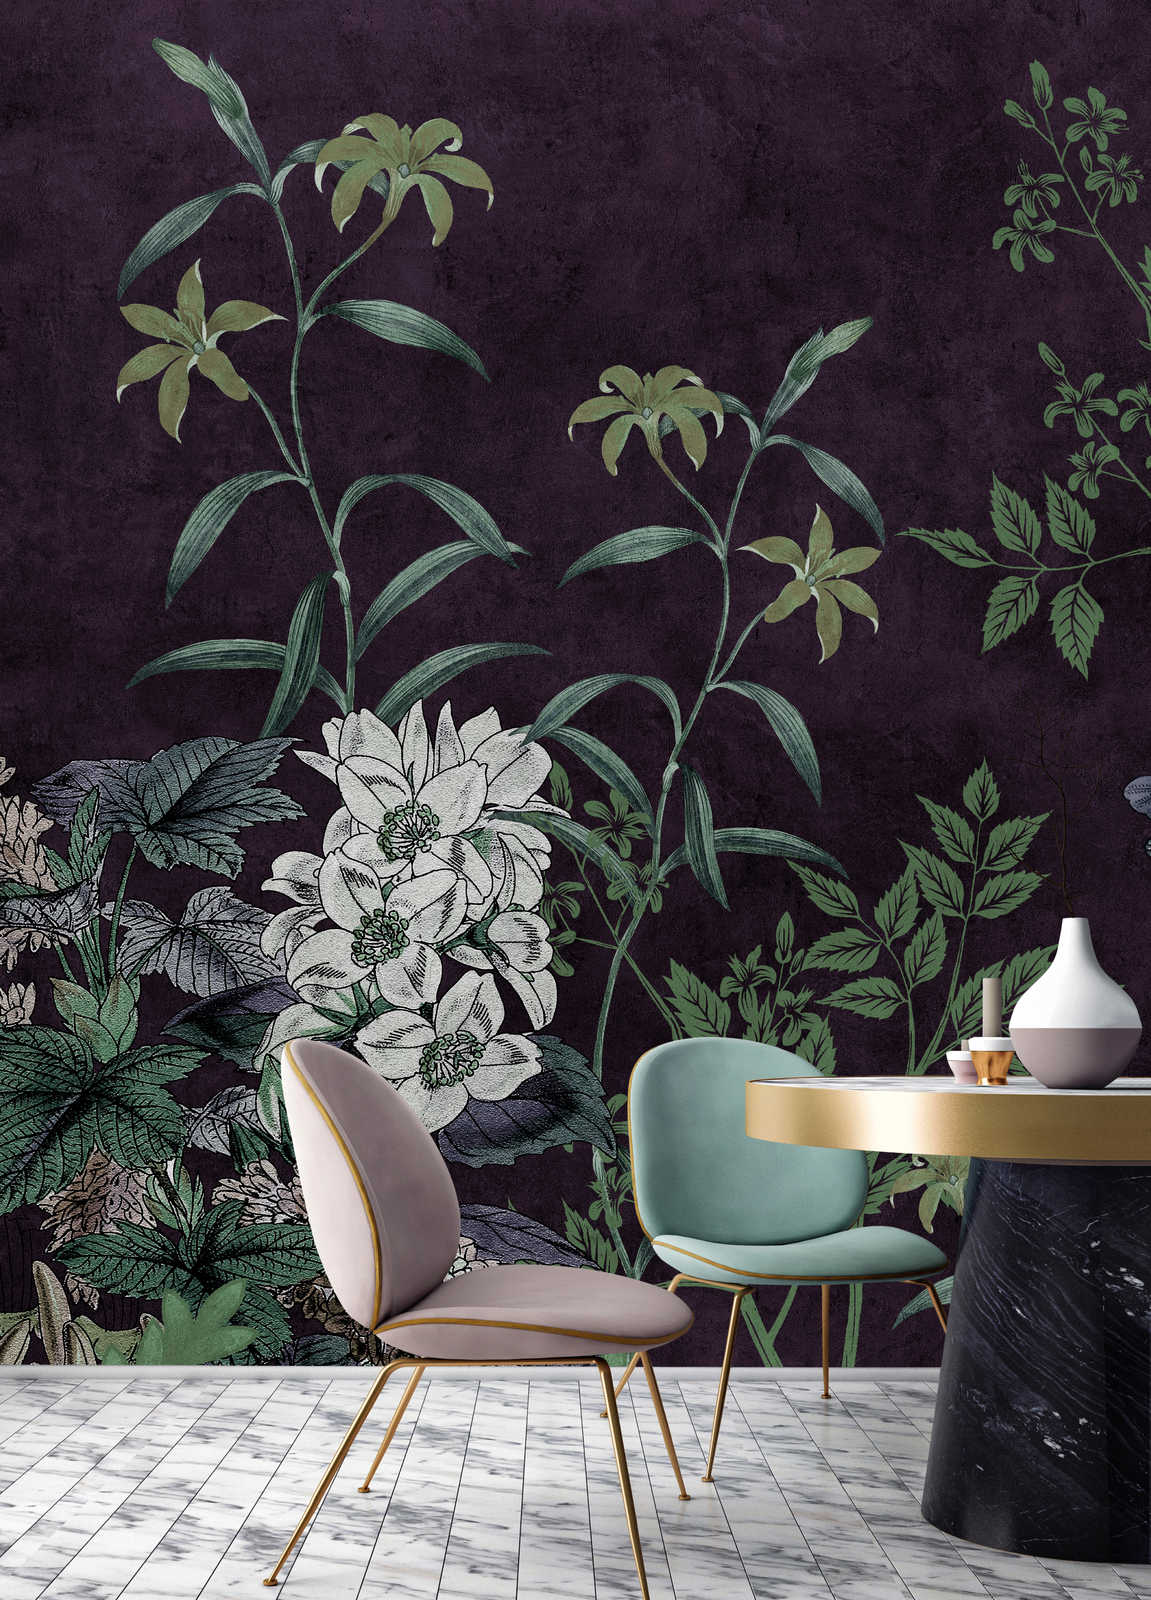             Dark Room 1 – Schwarze Fototapete Botanical Muster Grün
        